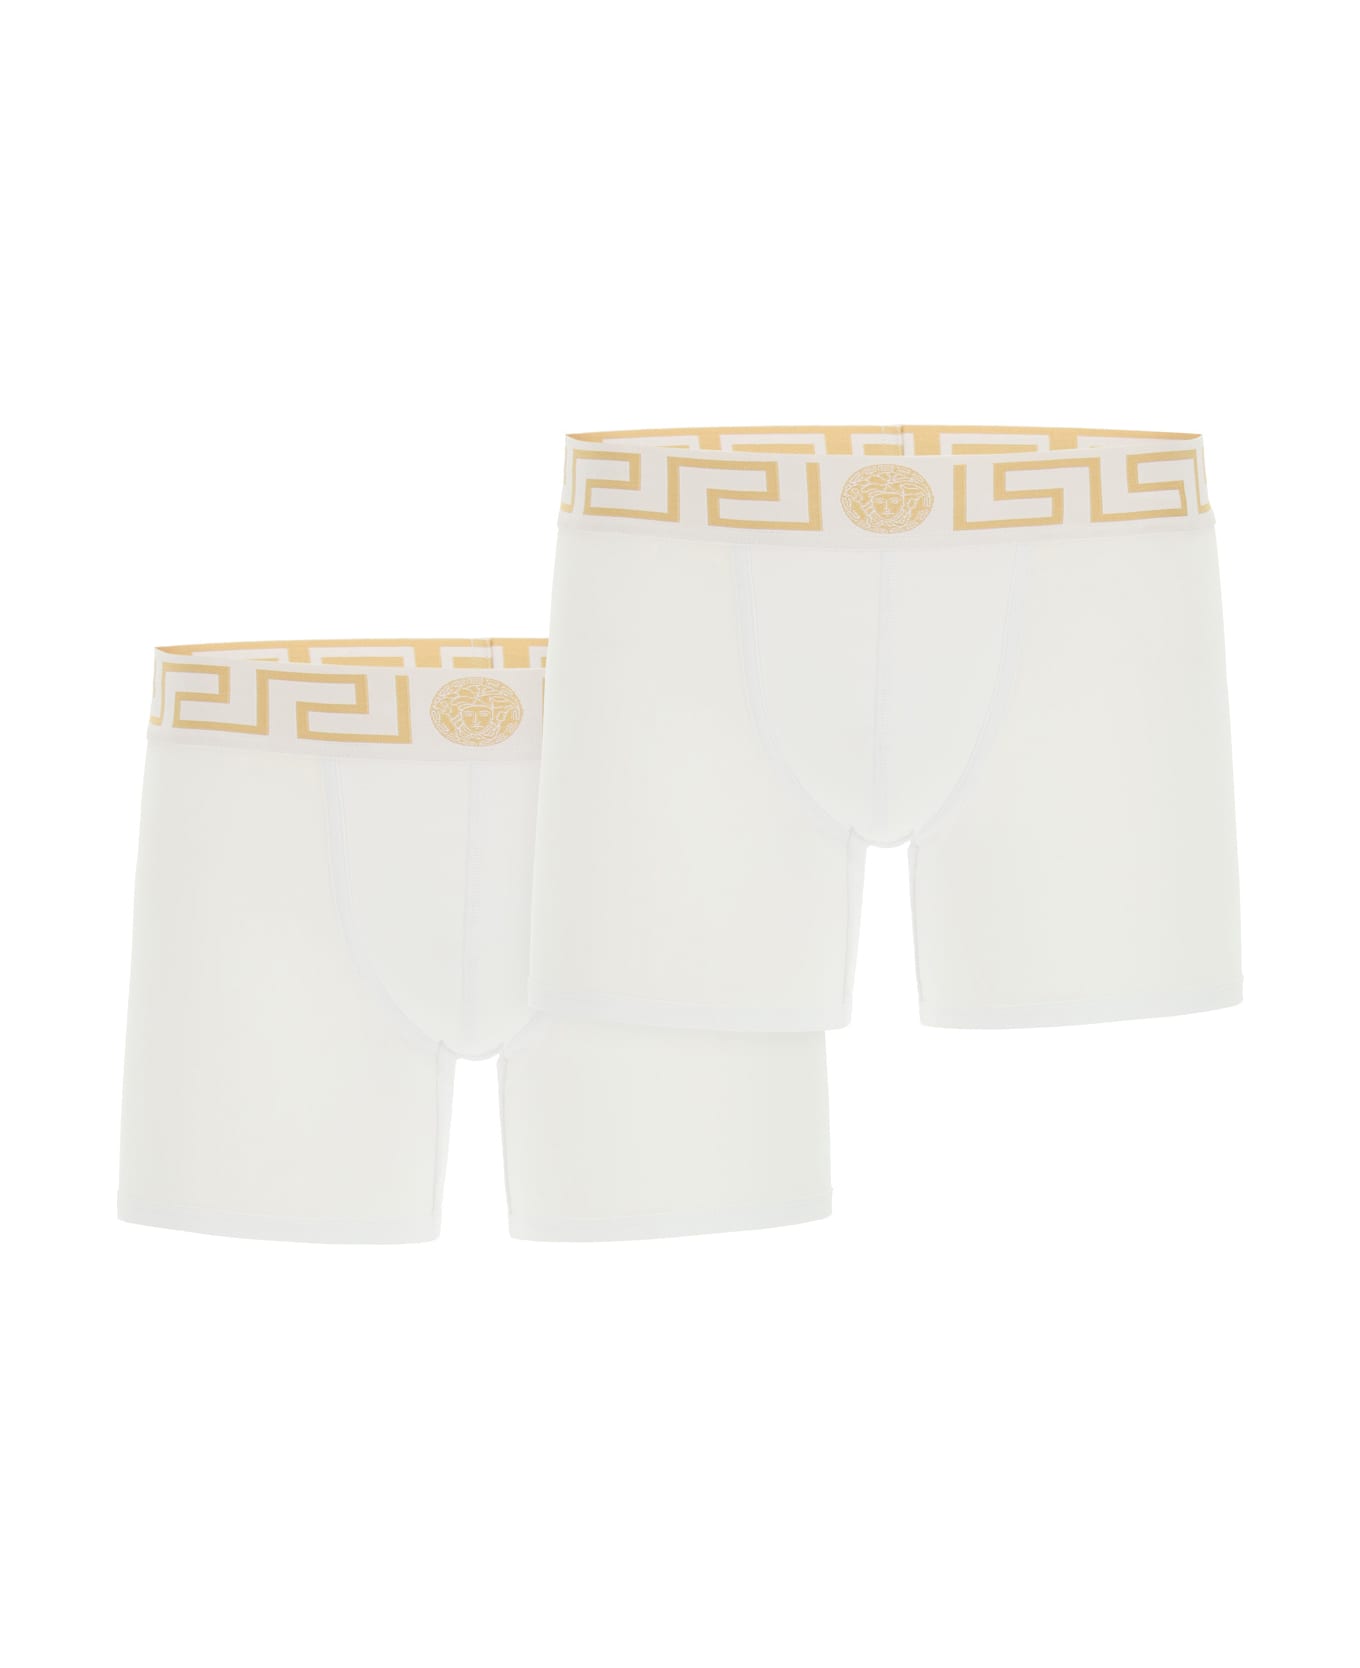 Versace Bi-pack Underwear Greca Border Trunks - H Bianco Greca Oro スイムトランクス